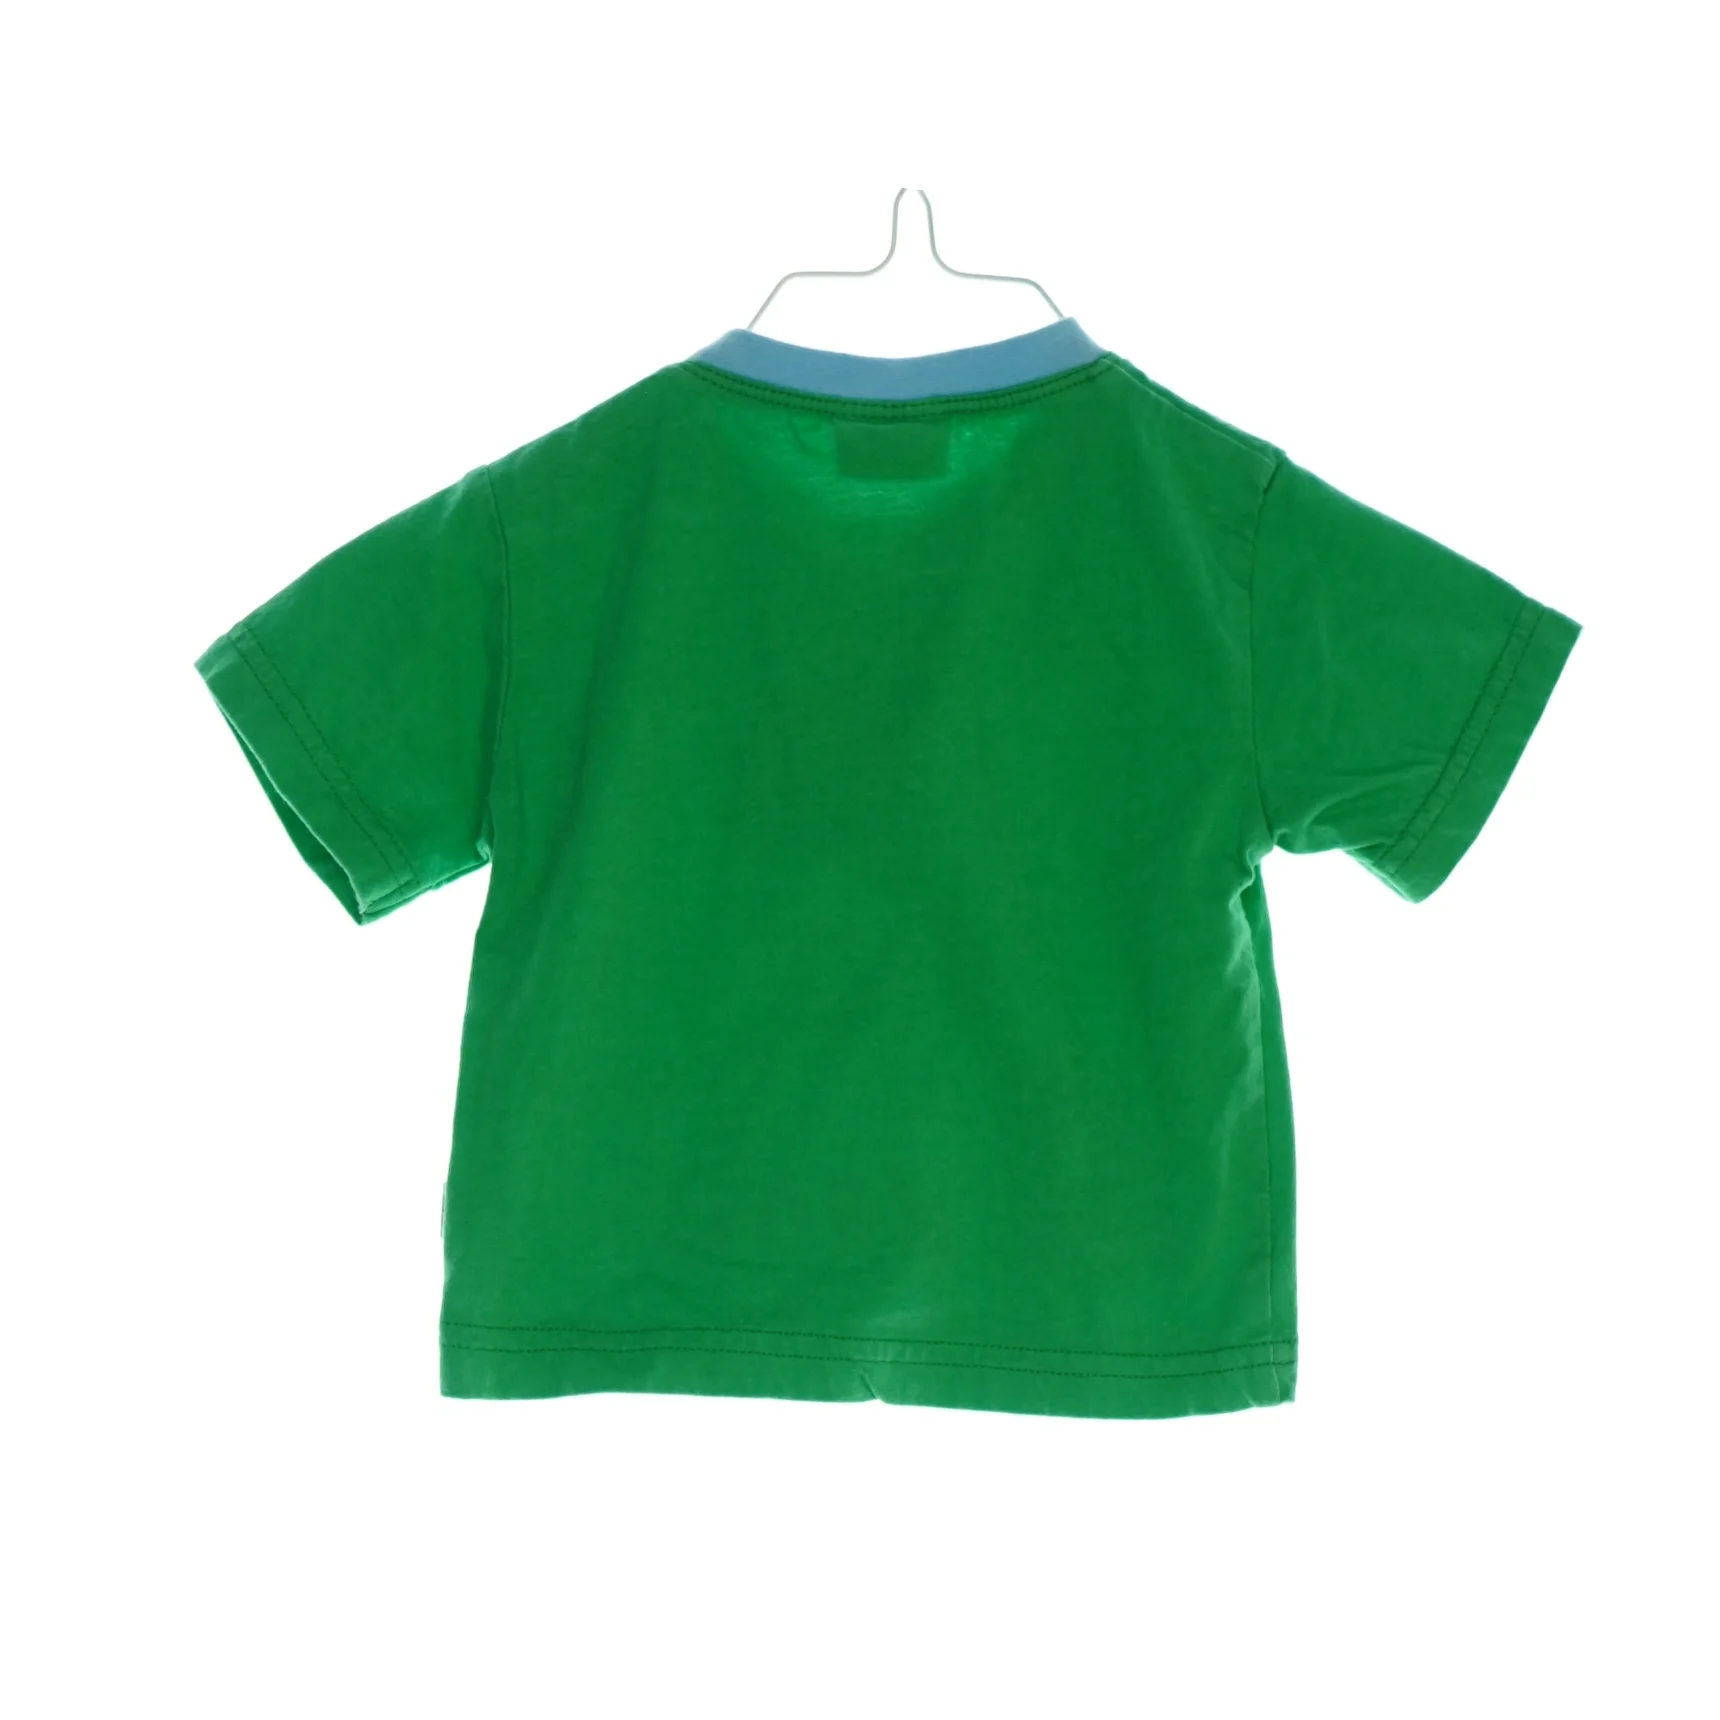 Savvy Incubus Bliver værre T shirt fra Rasmus Klump (Str. 62 cm) | Orderly.shop